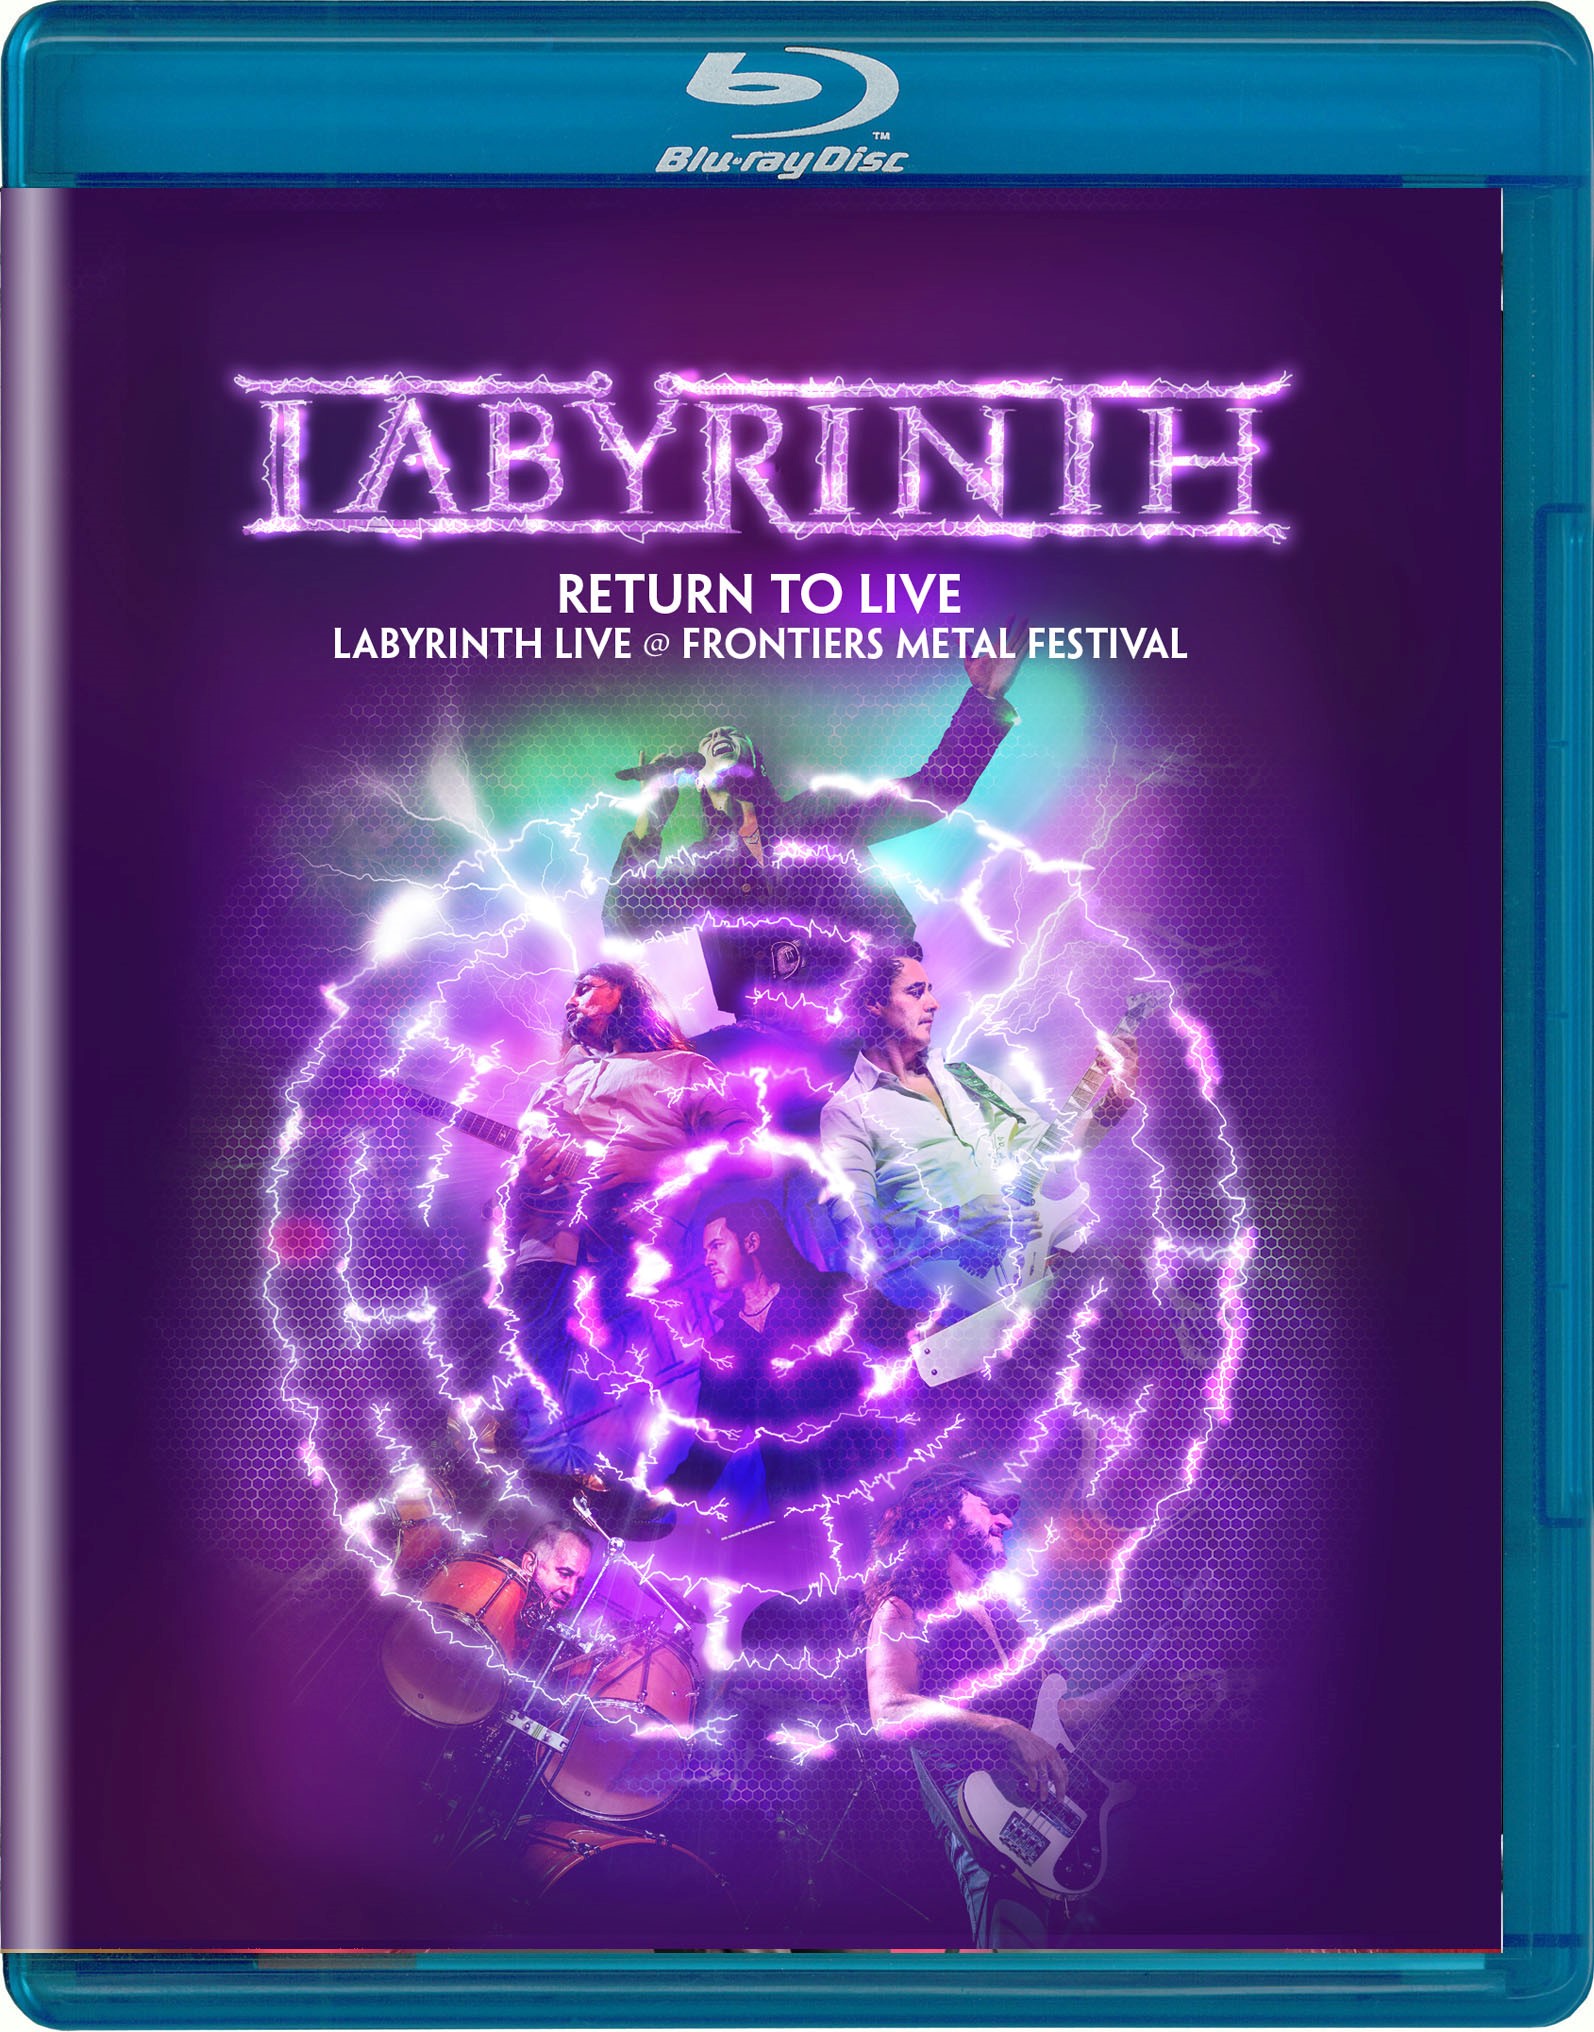 Labyrinth - Return to live